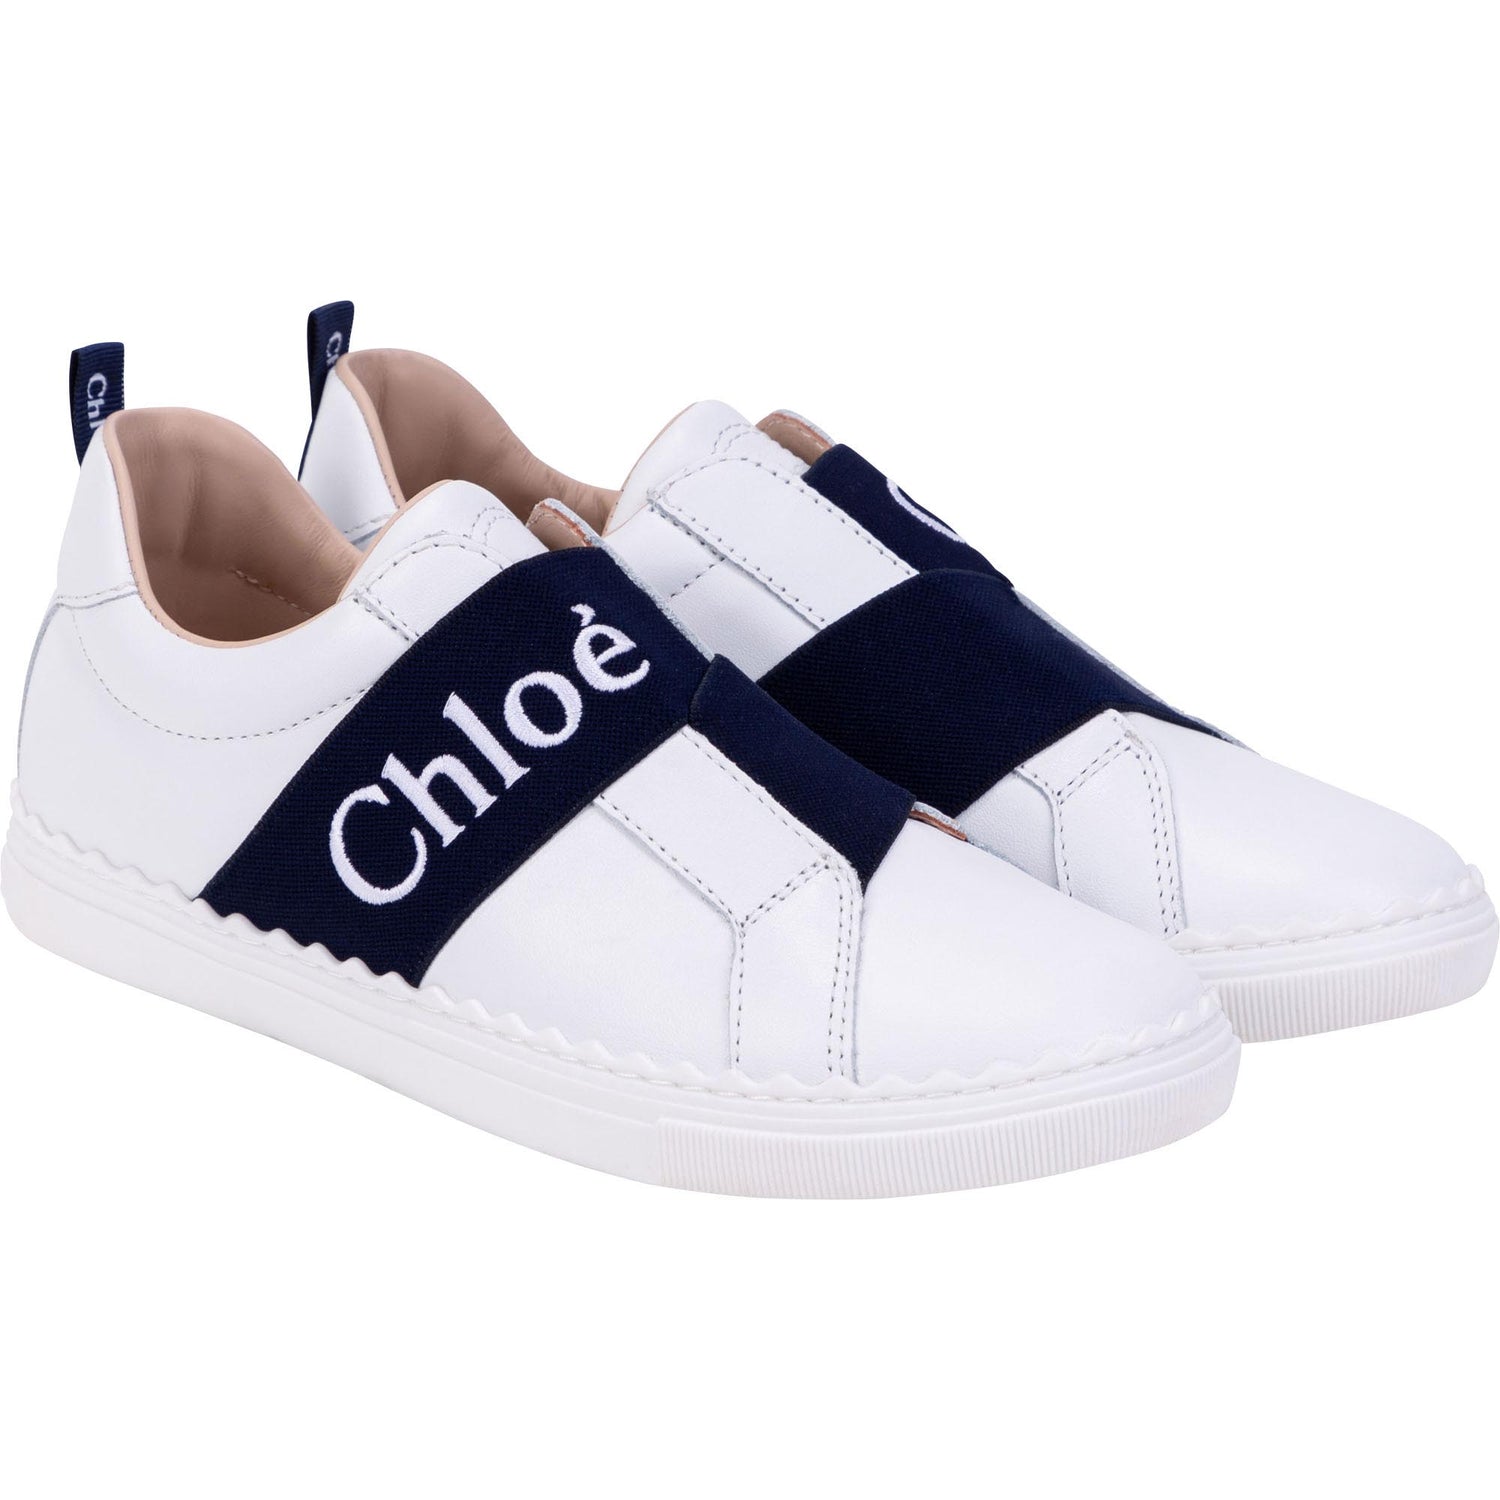 Chloe trainers - C19143